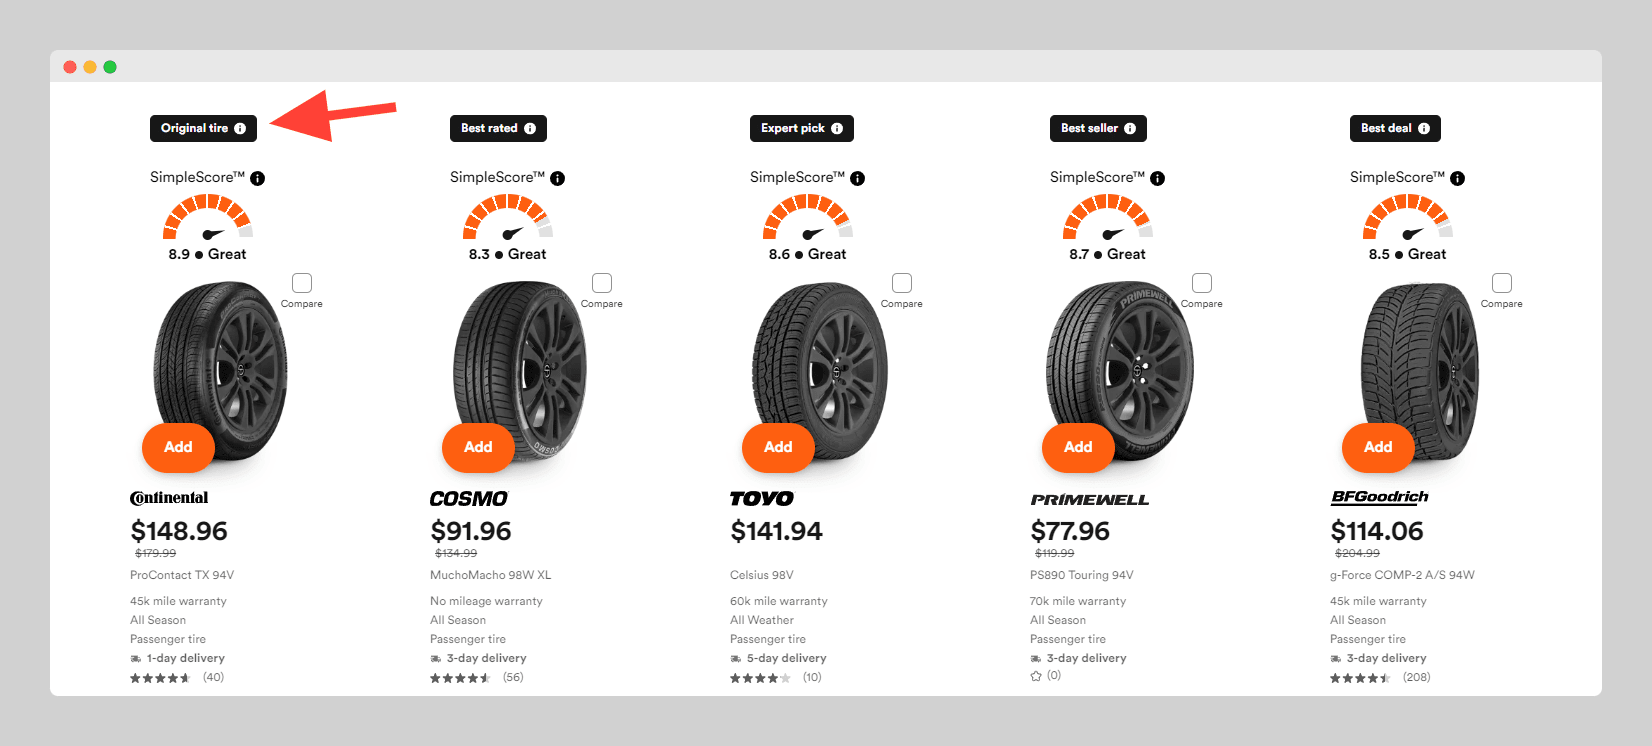 Original Tire Badging for OEM tires on SimpleTire.com